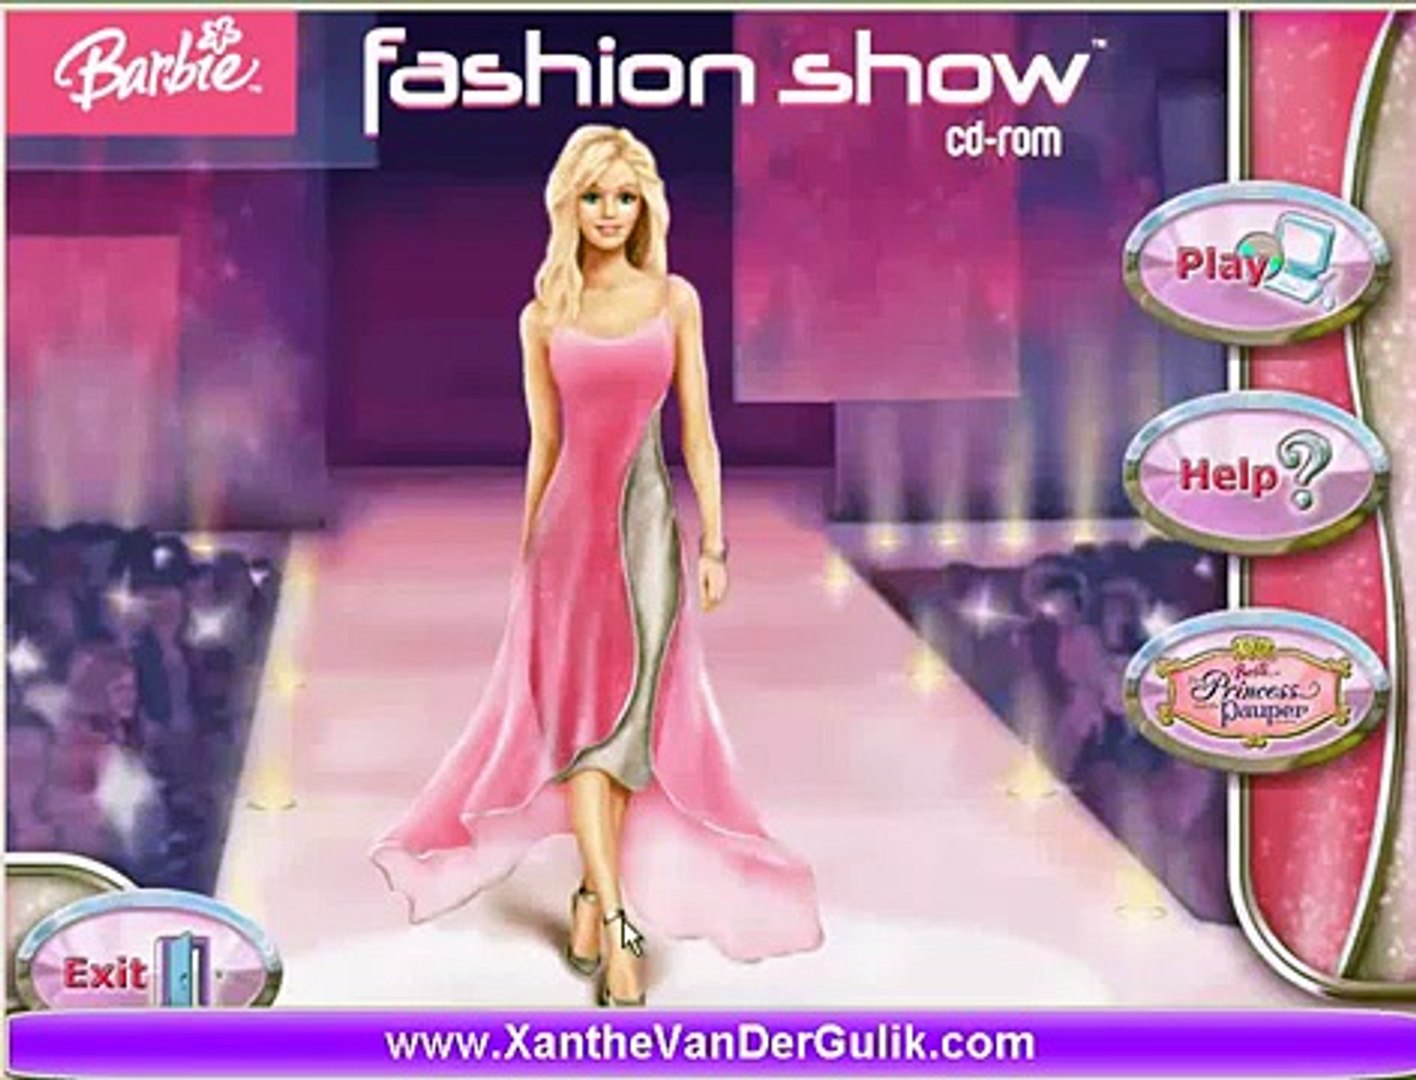 barbie game fashion show cheap online